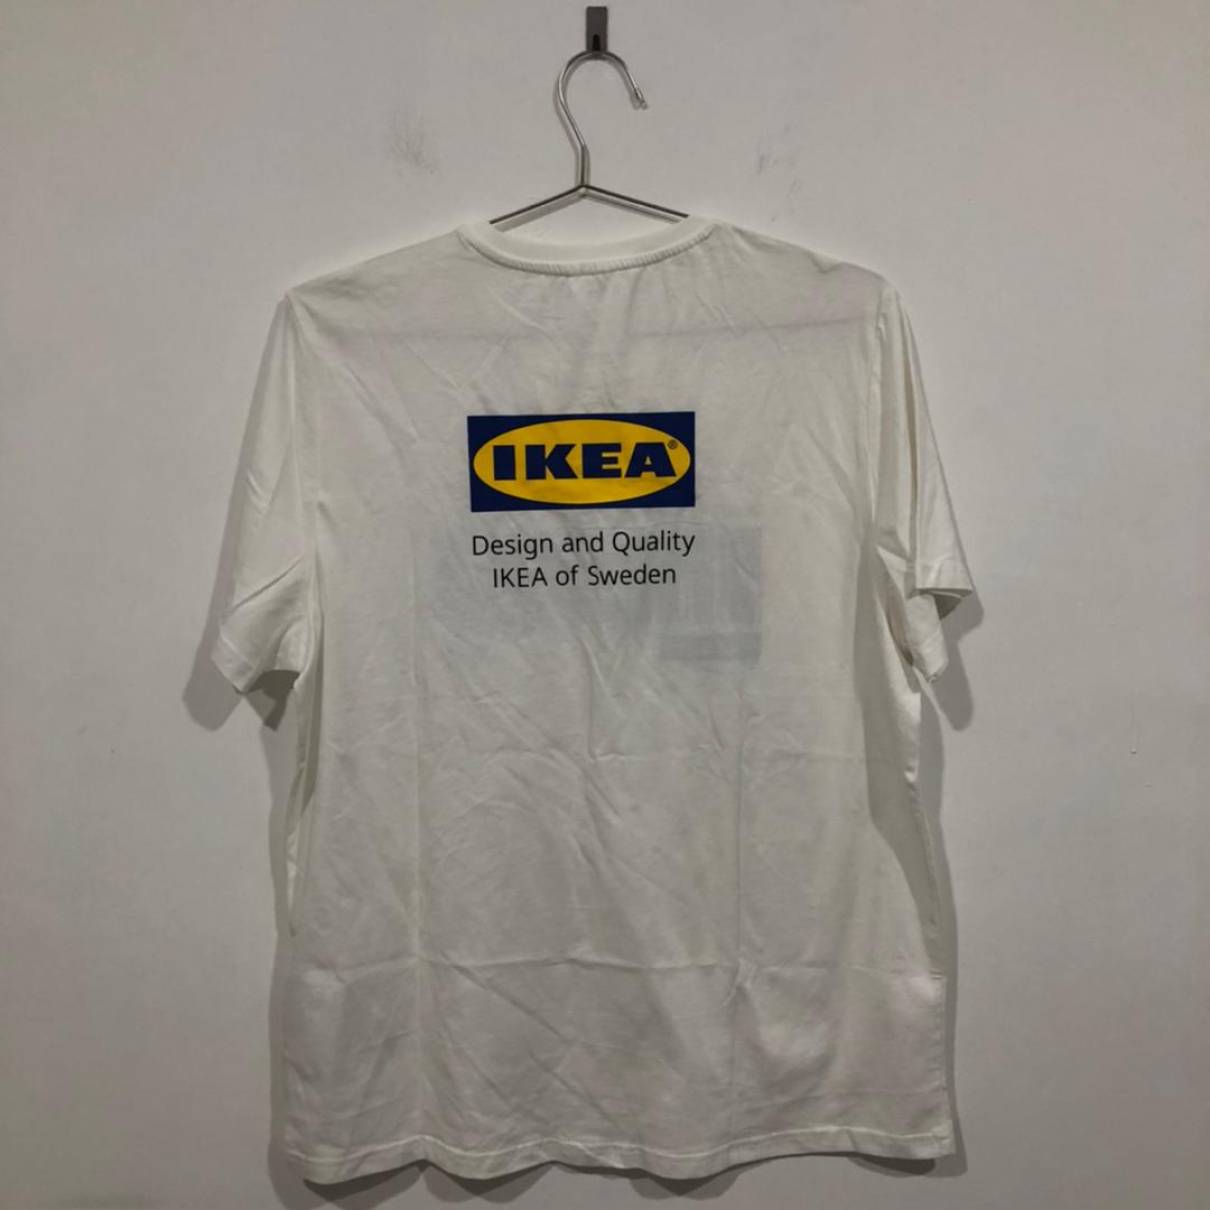 T-shirt Virgil Abloh x Ikea White size XL International in Cotton 25042743